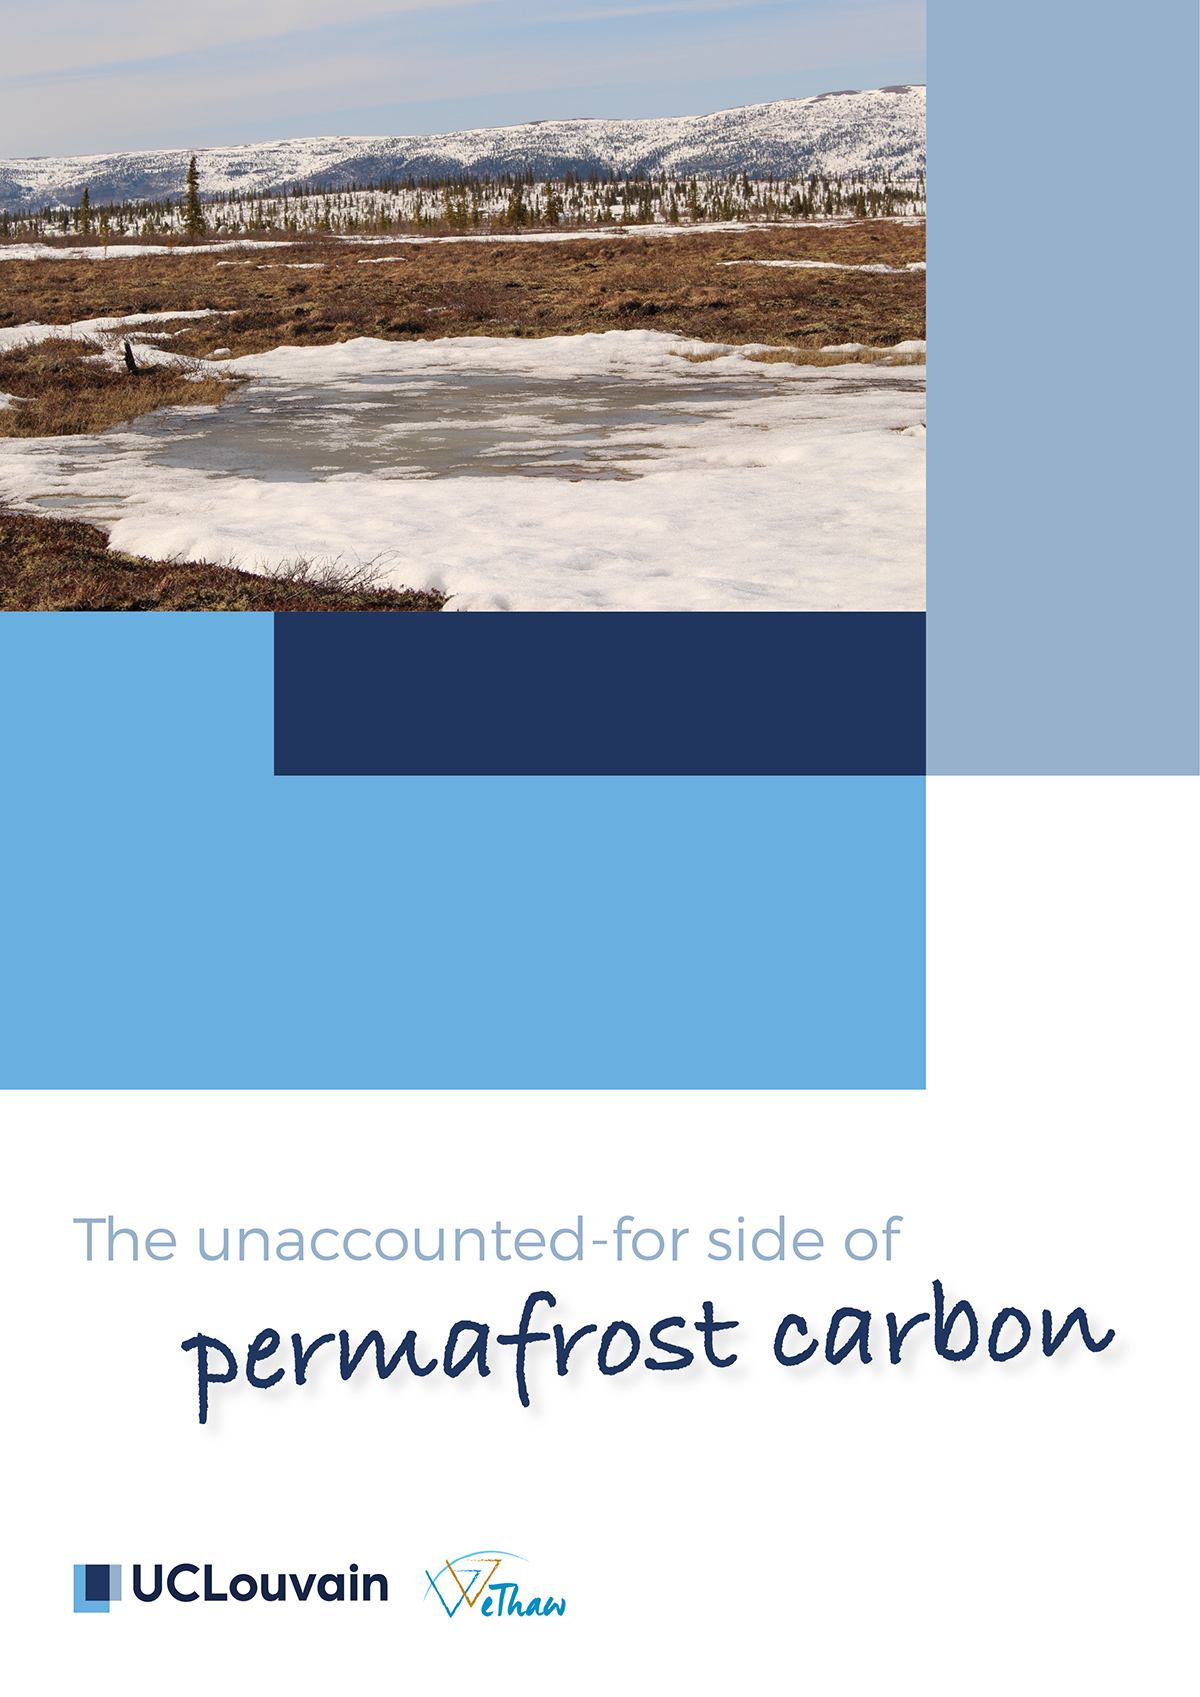 permafrost carbon, UClouvain